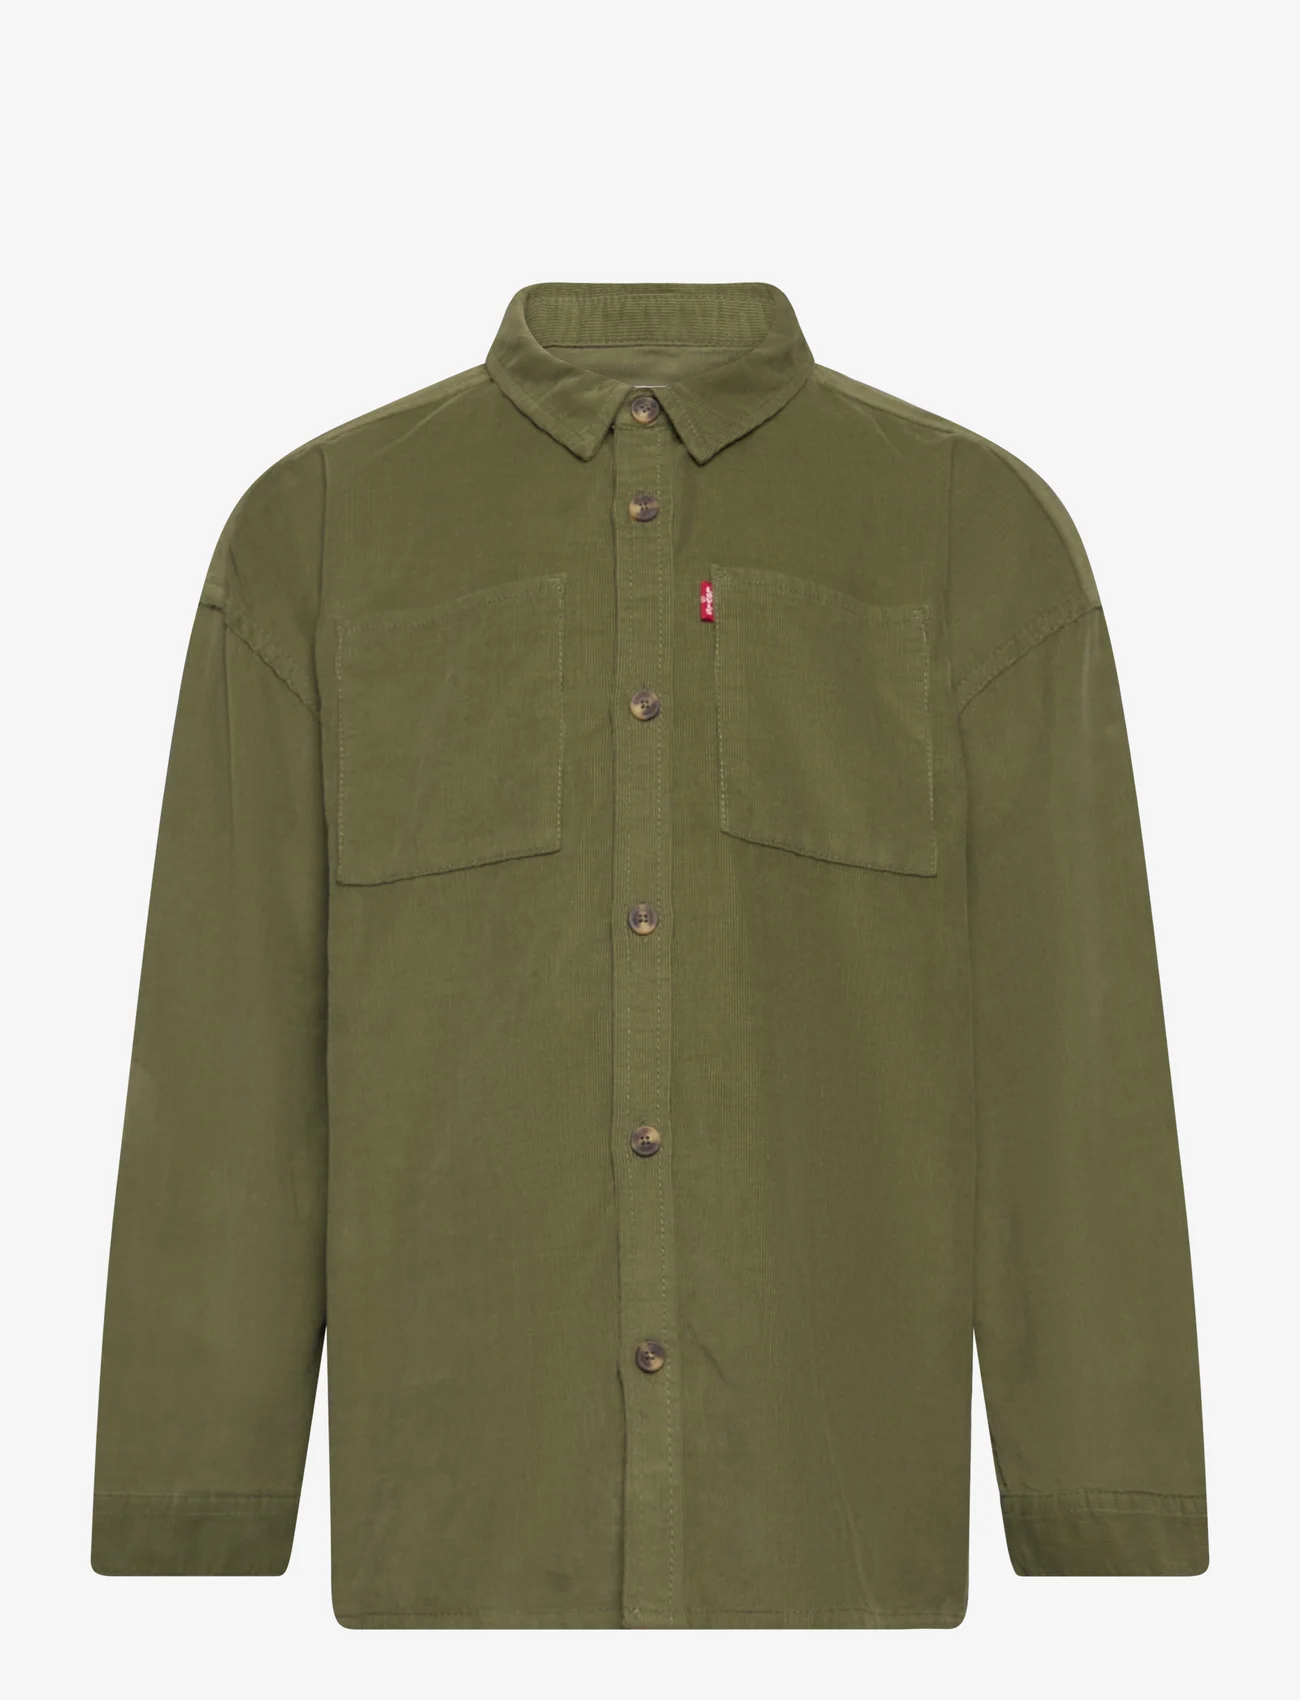 Levi's - Levi's® Corduroy Button Up Shirt - langermede skjorter - green - 0